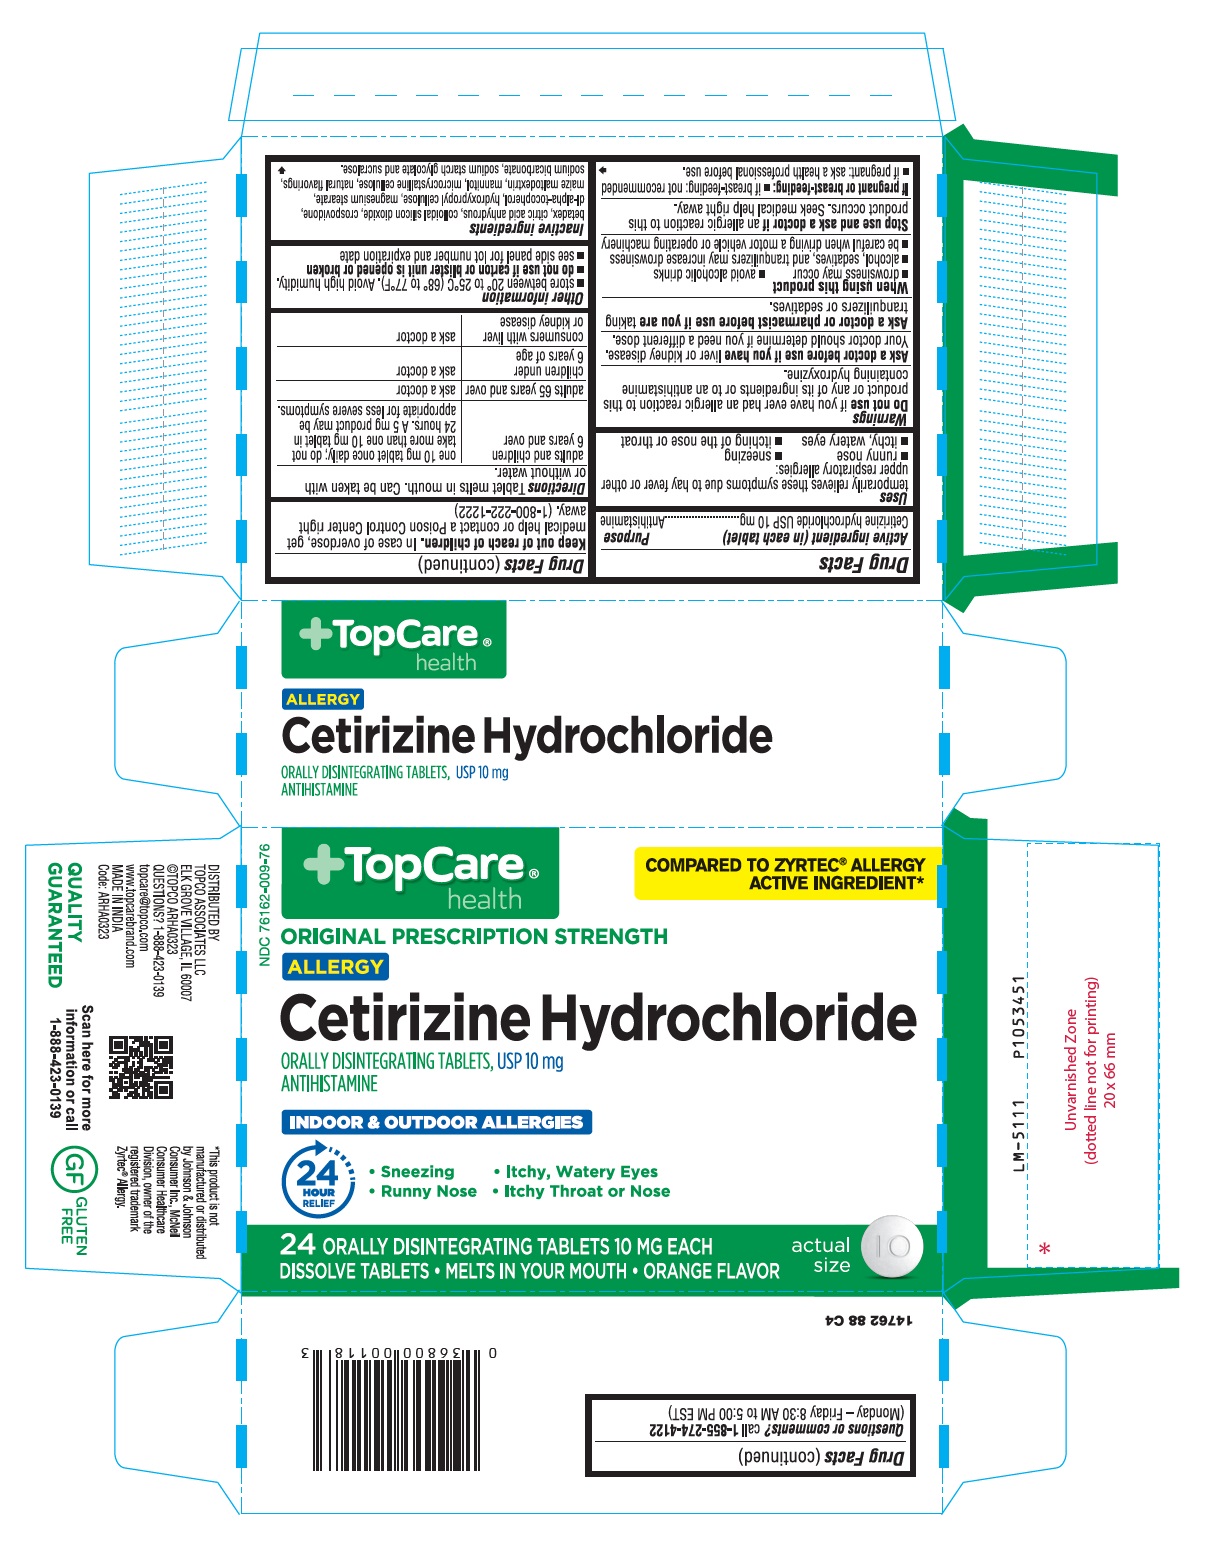 PACKAGE LABEL-PRINCIPAL DISPLAY PANEL -10 mg (24 Orally Disintegrating Tablets) Blister Carton